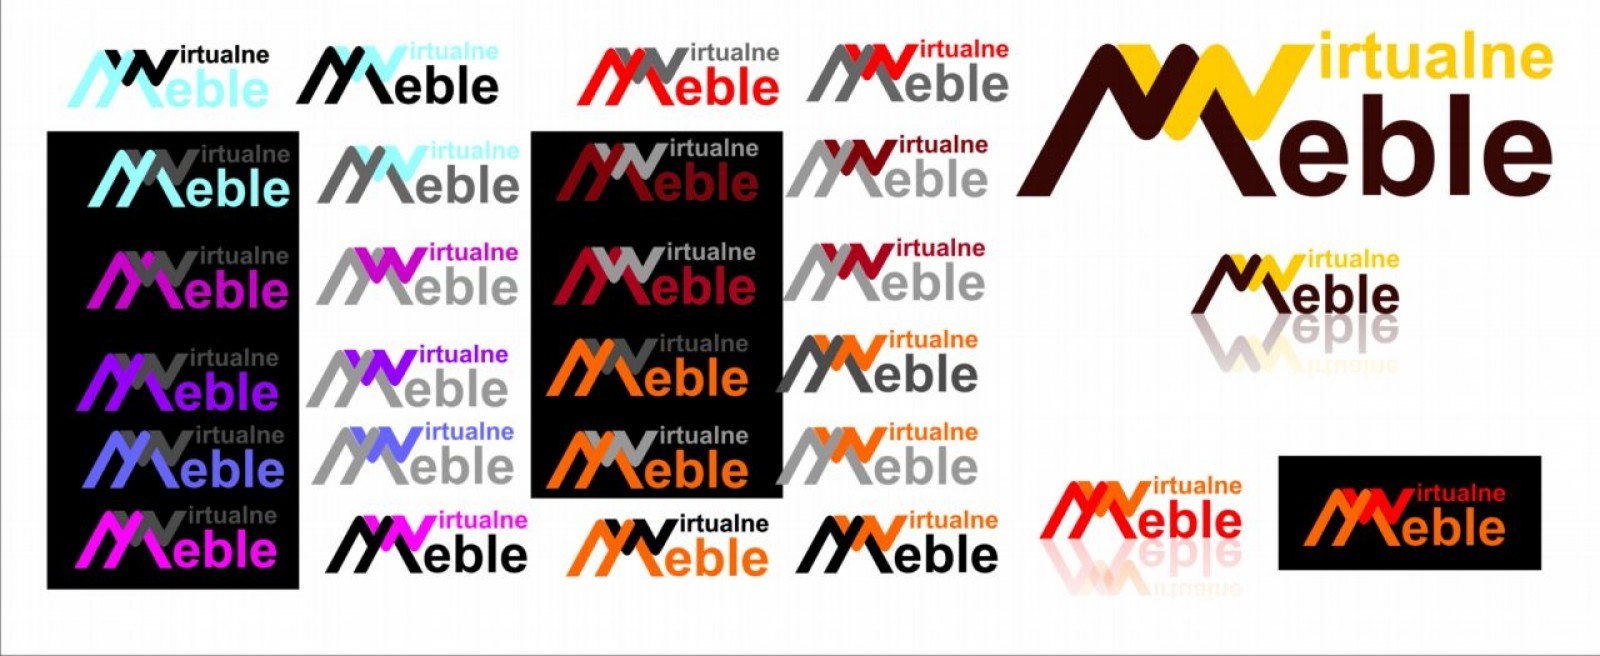 wirtualne meble logo